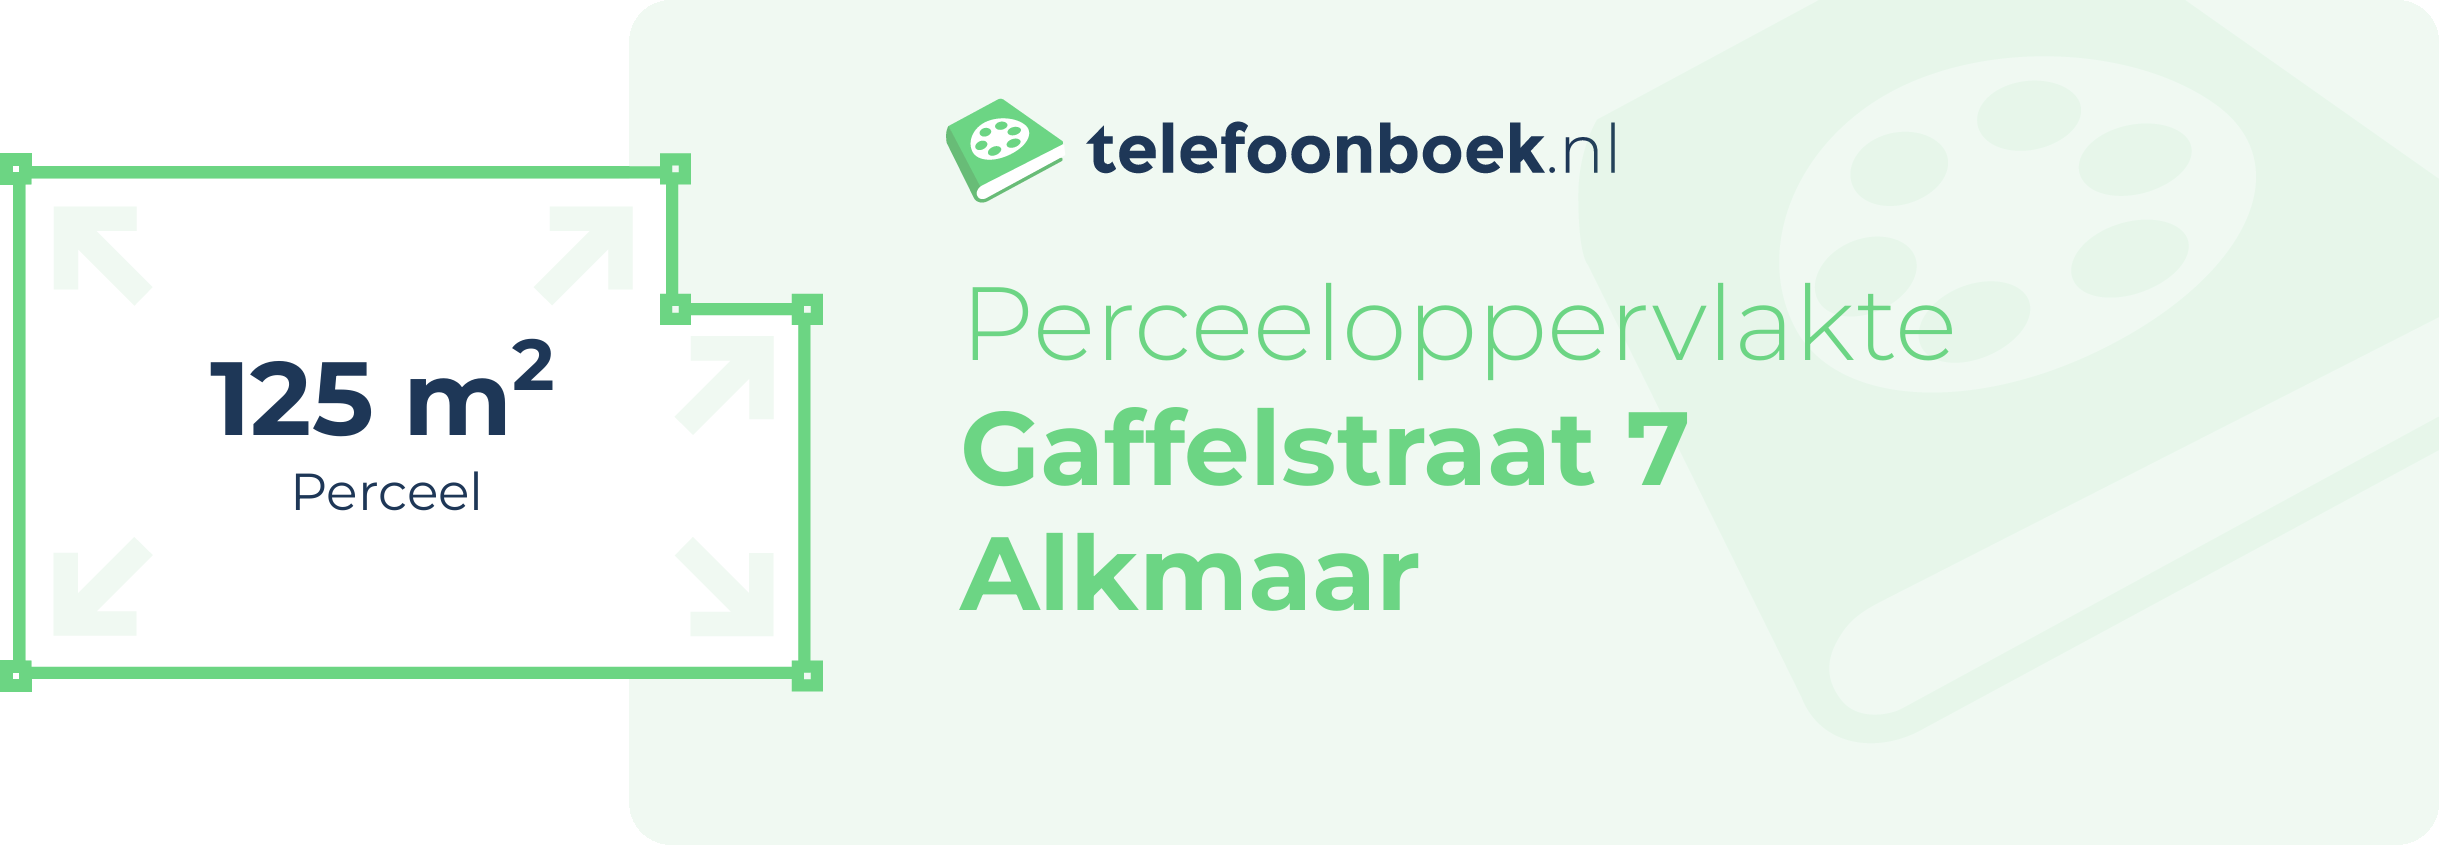 Perceeloppervlakte Gaffelstraat 7 Alkmaar